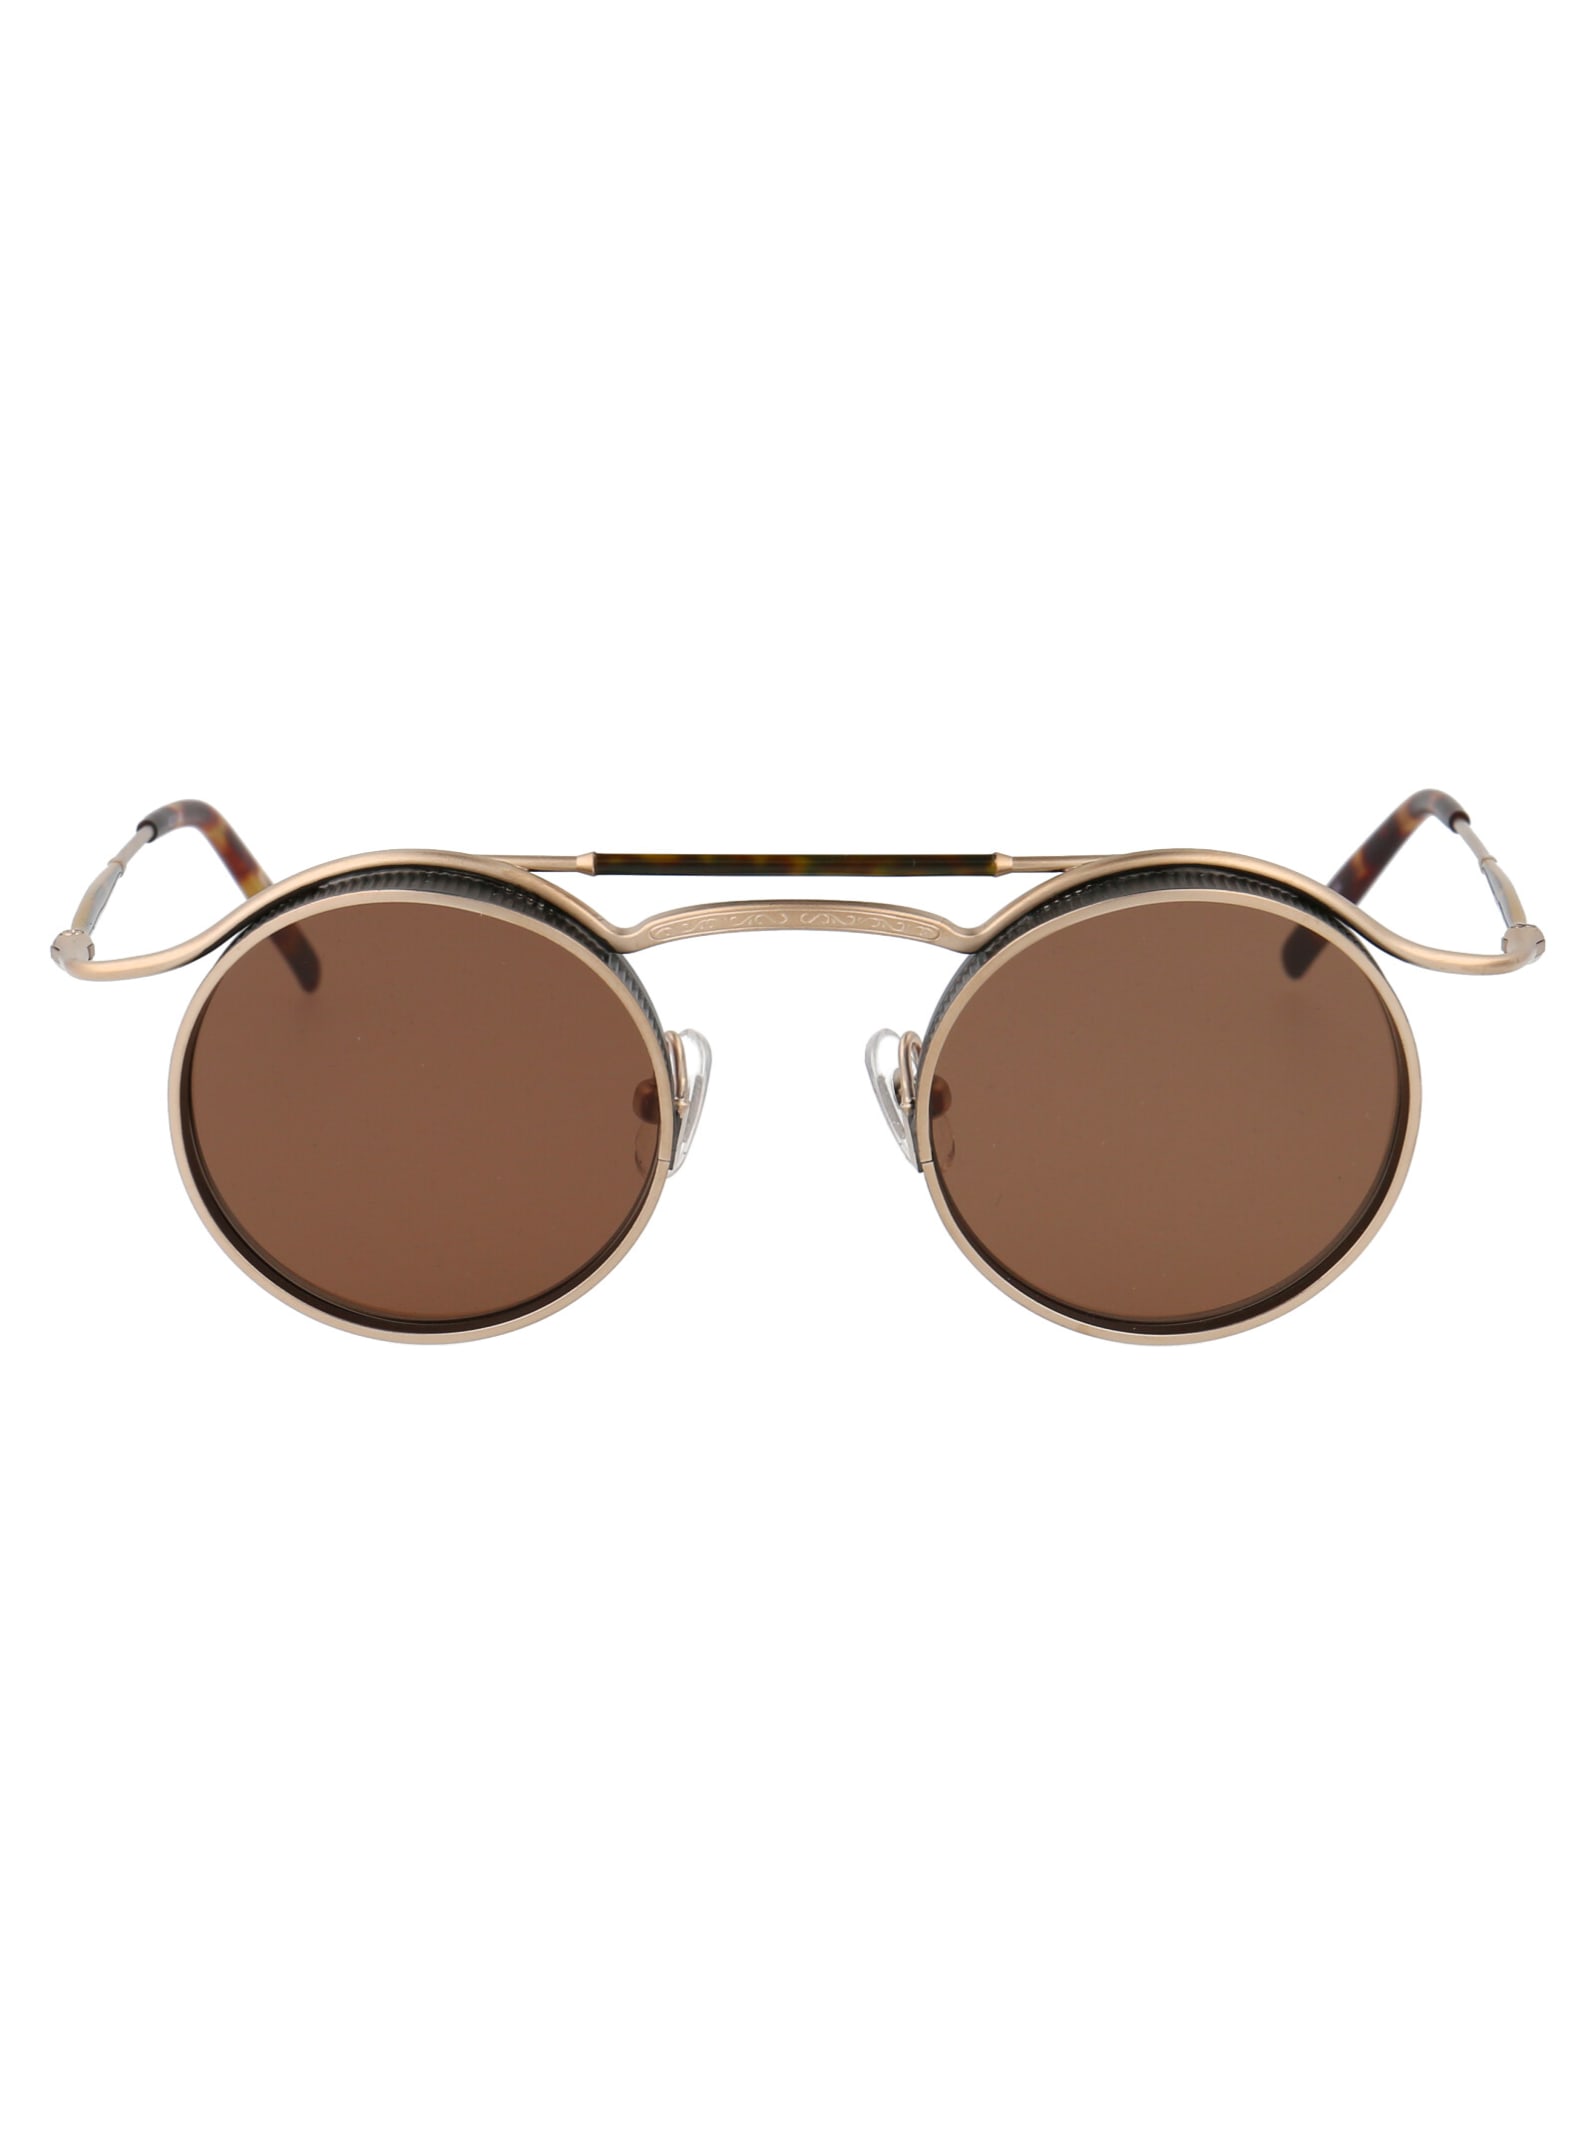 Matsuda 2903h Sunglasses In Mgp-mbk Matte Gold Platted / Matte Black